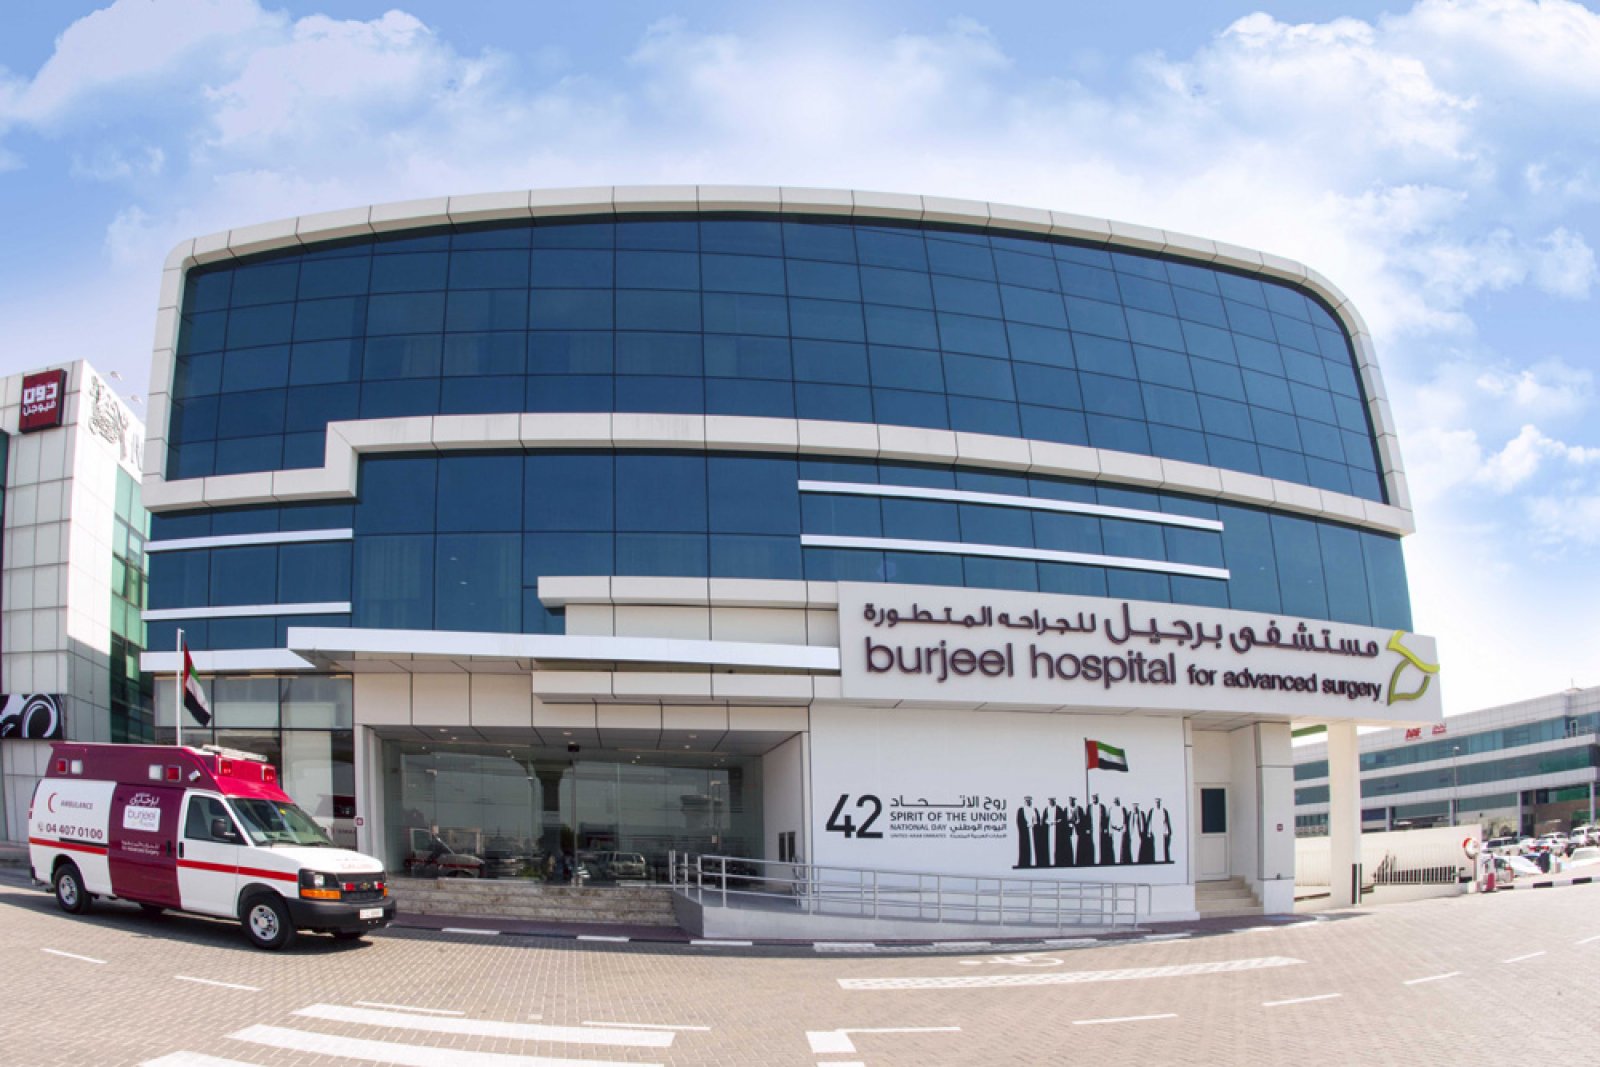 Burjeel Daycare Hospital, Abu Dhabi, U.A.E.